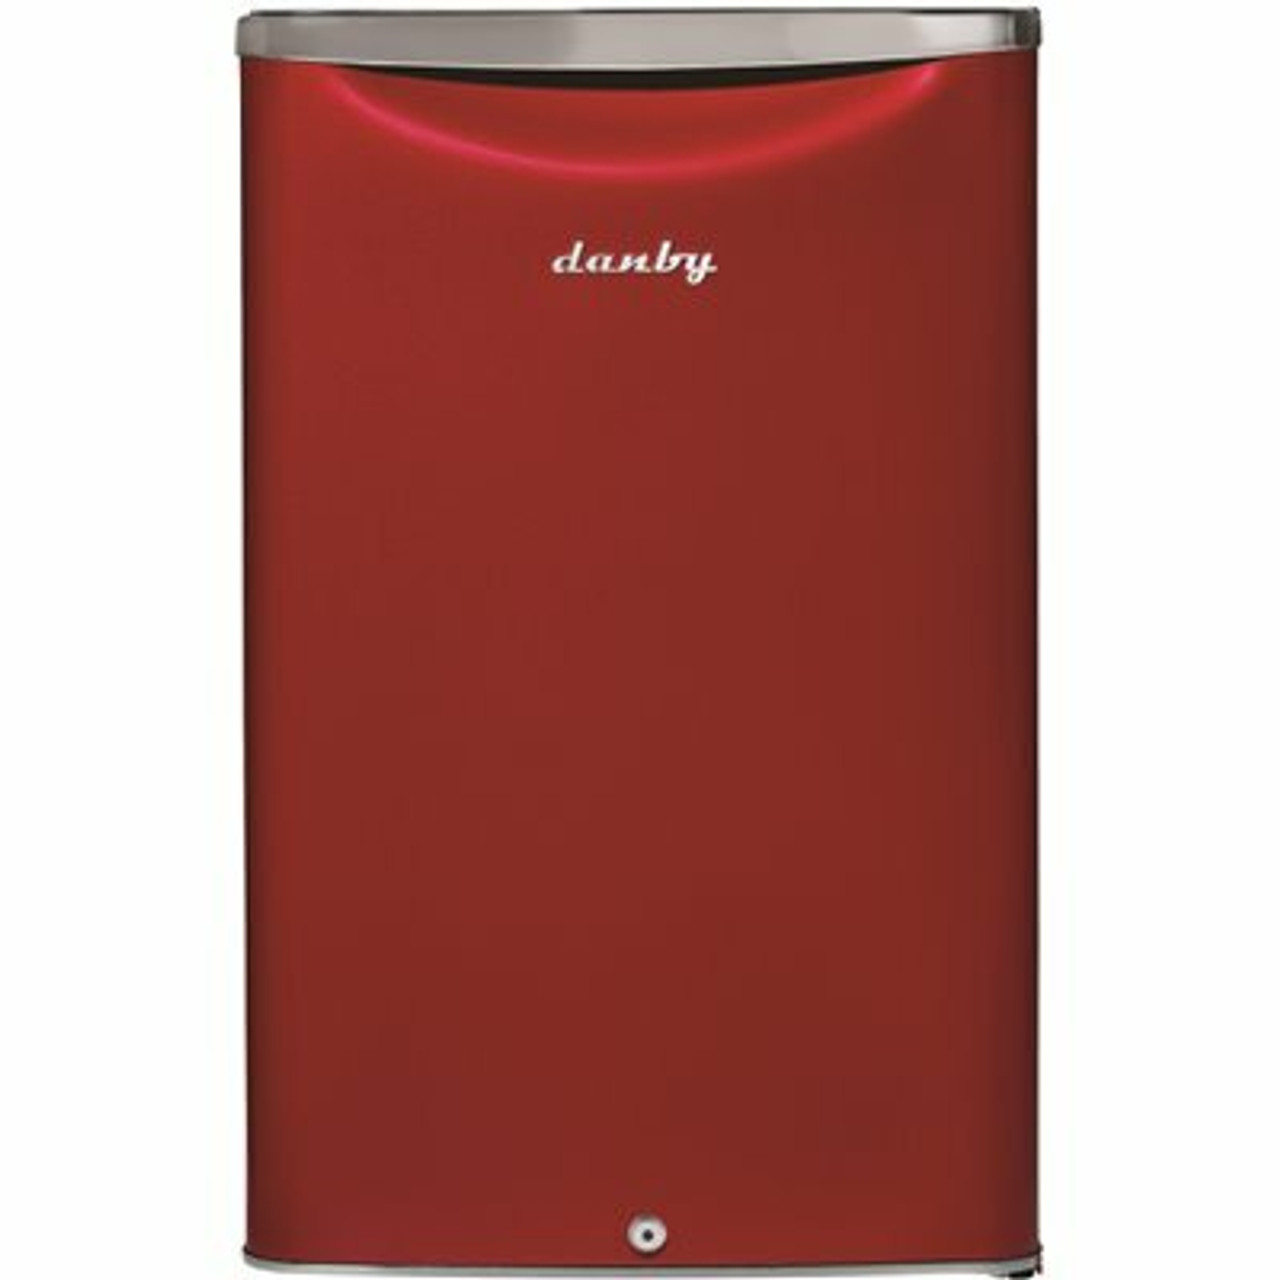 Danby 4.4 Cu. Ft. Mini Fridge In Metallic Red Without Freezer